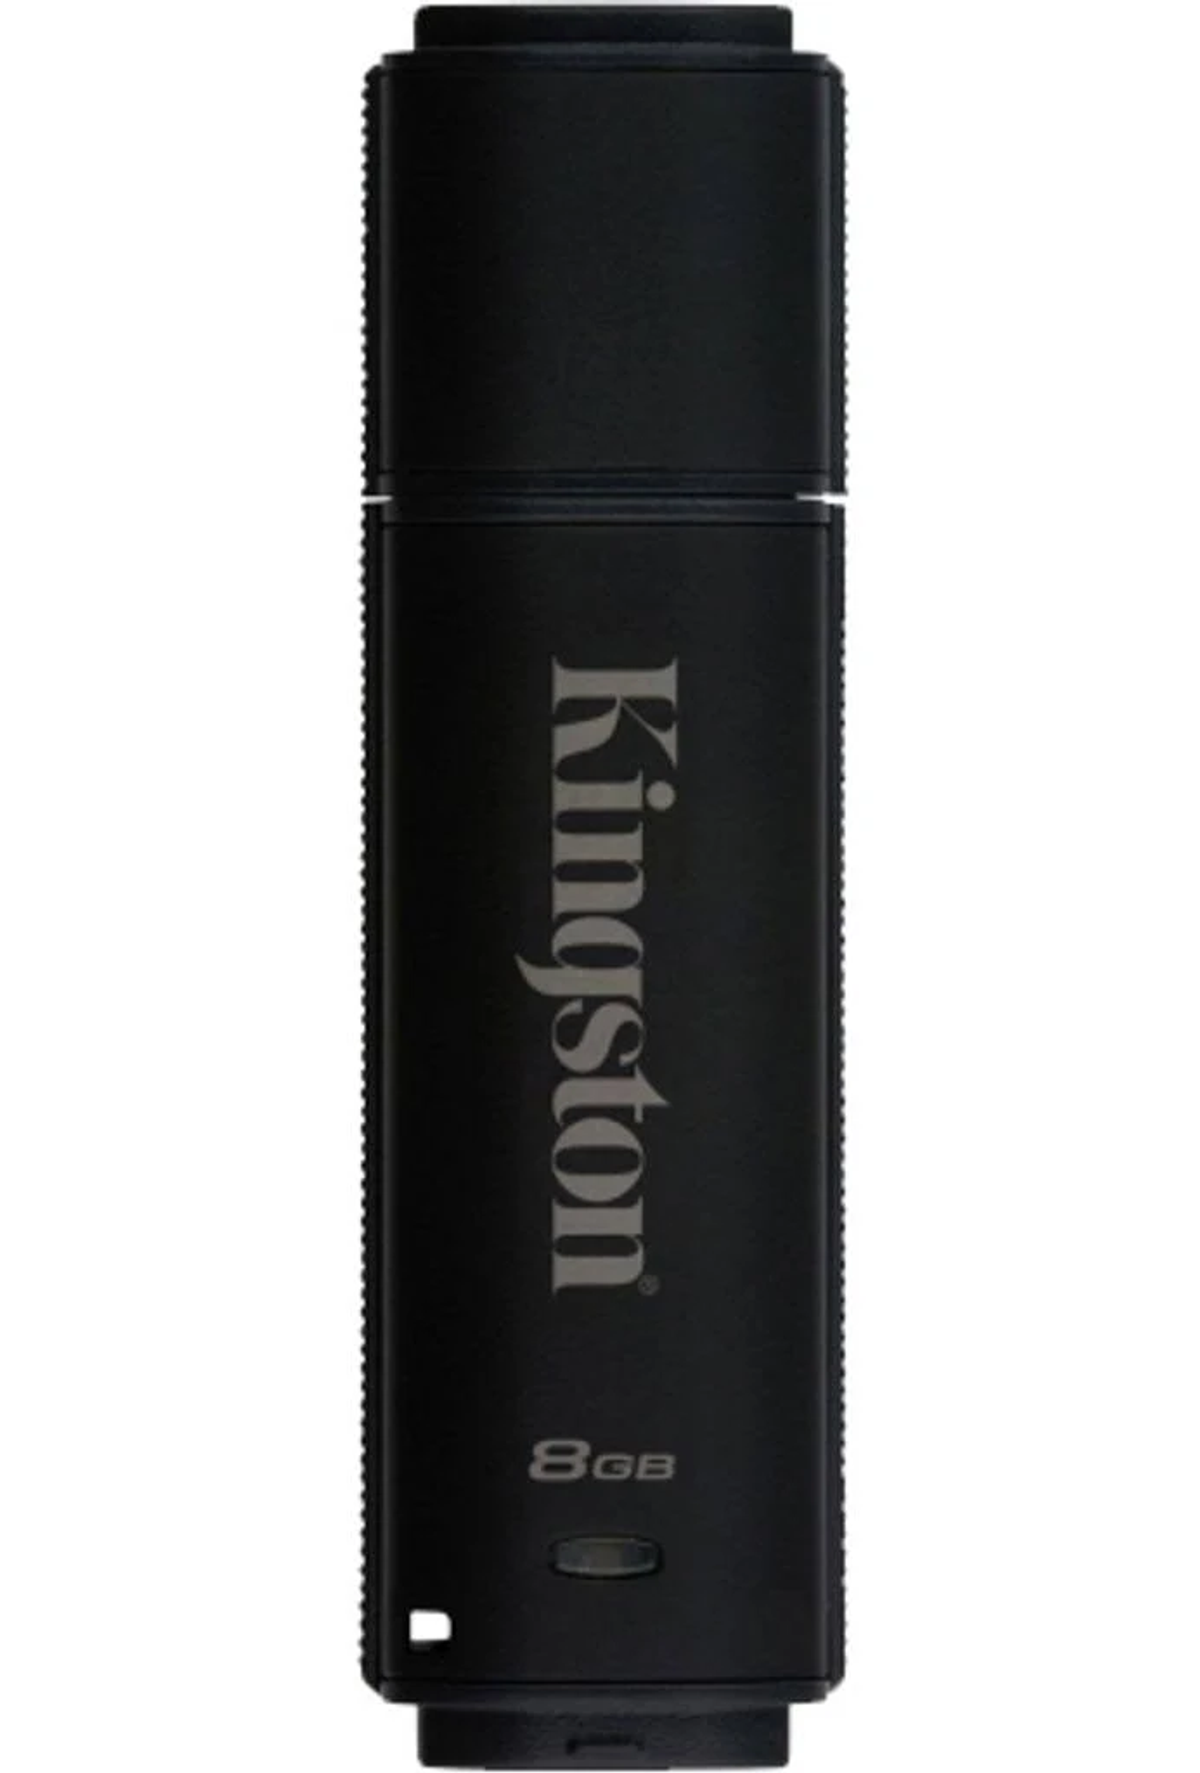 (Schwarz, DT4000G2DM/32GB GB) KINGSTON USB-Flash-Laufwerk 32